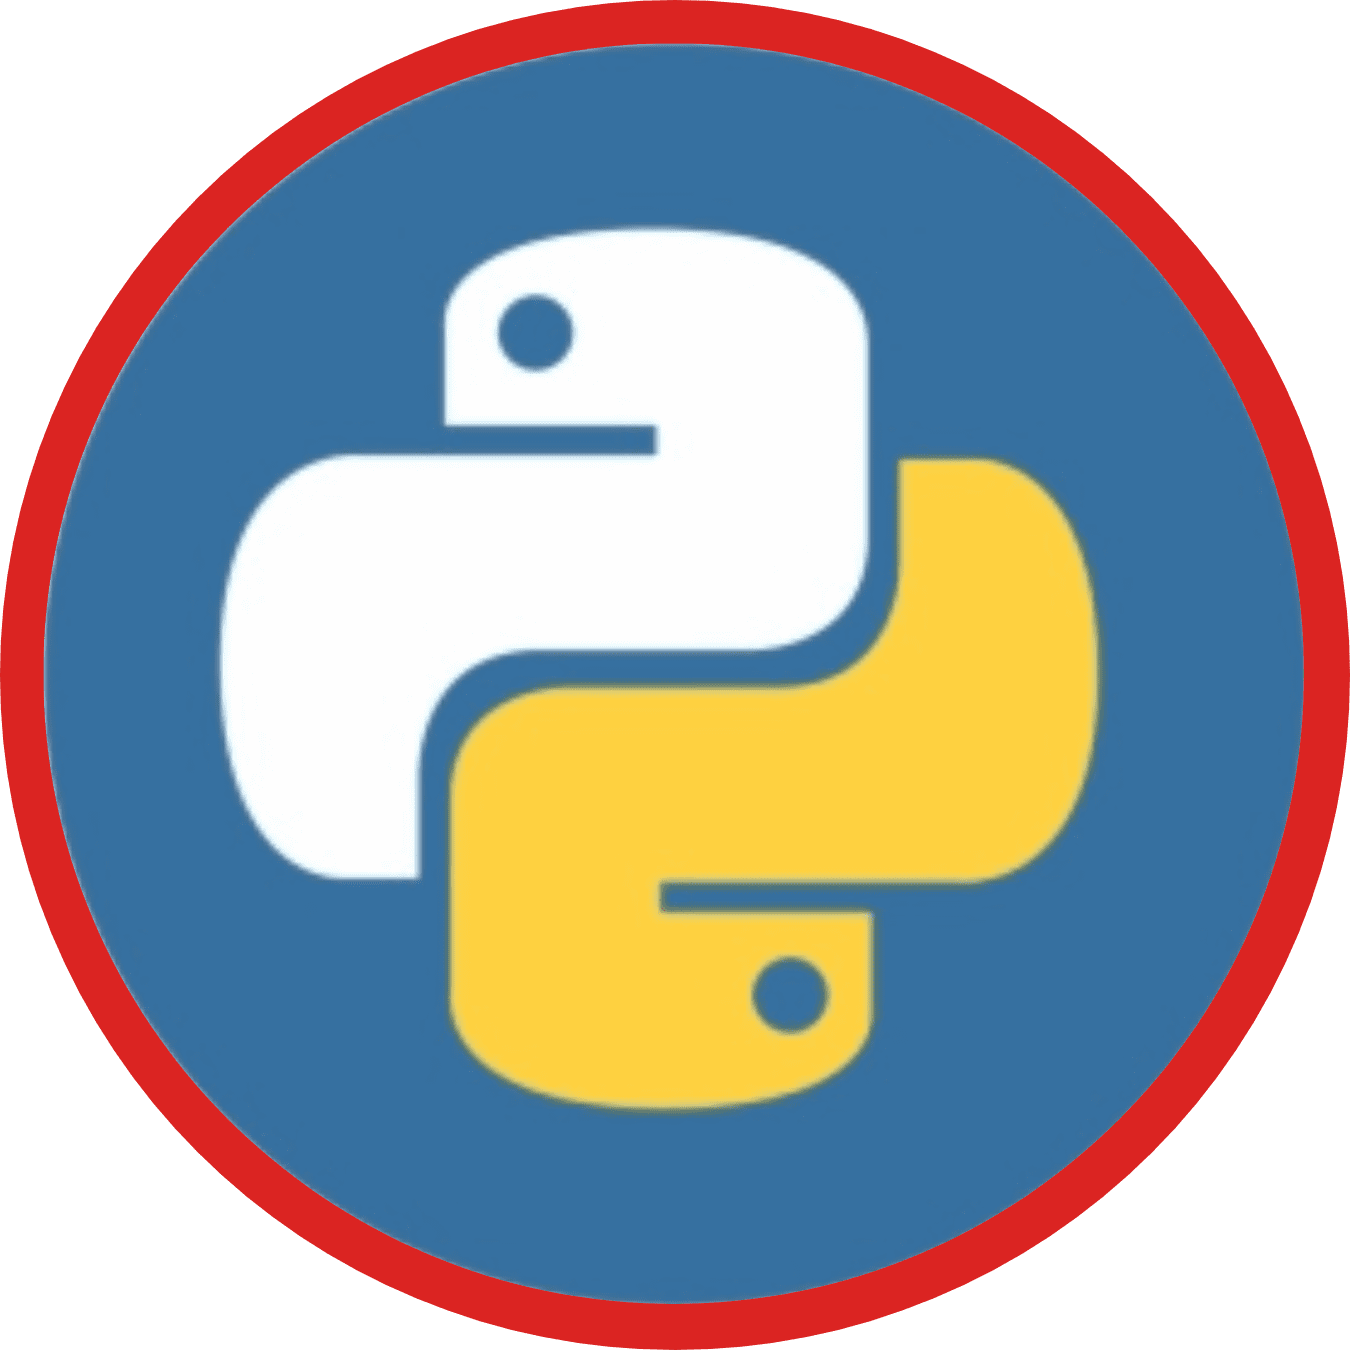 Python</p>
<p>